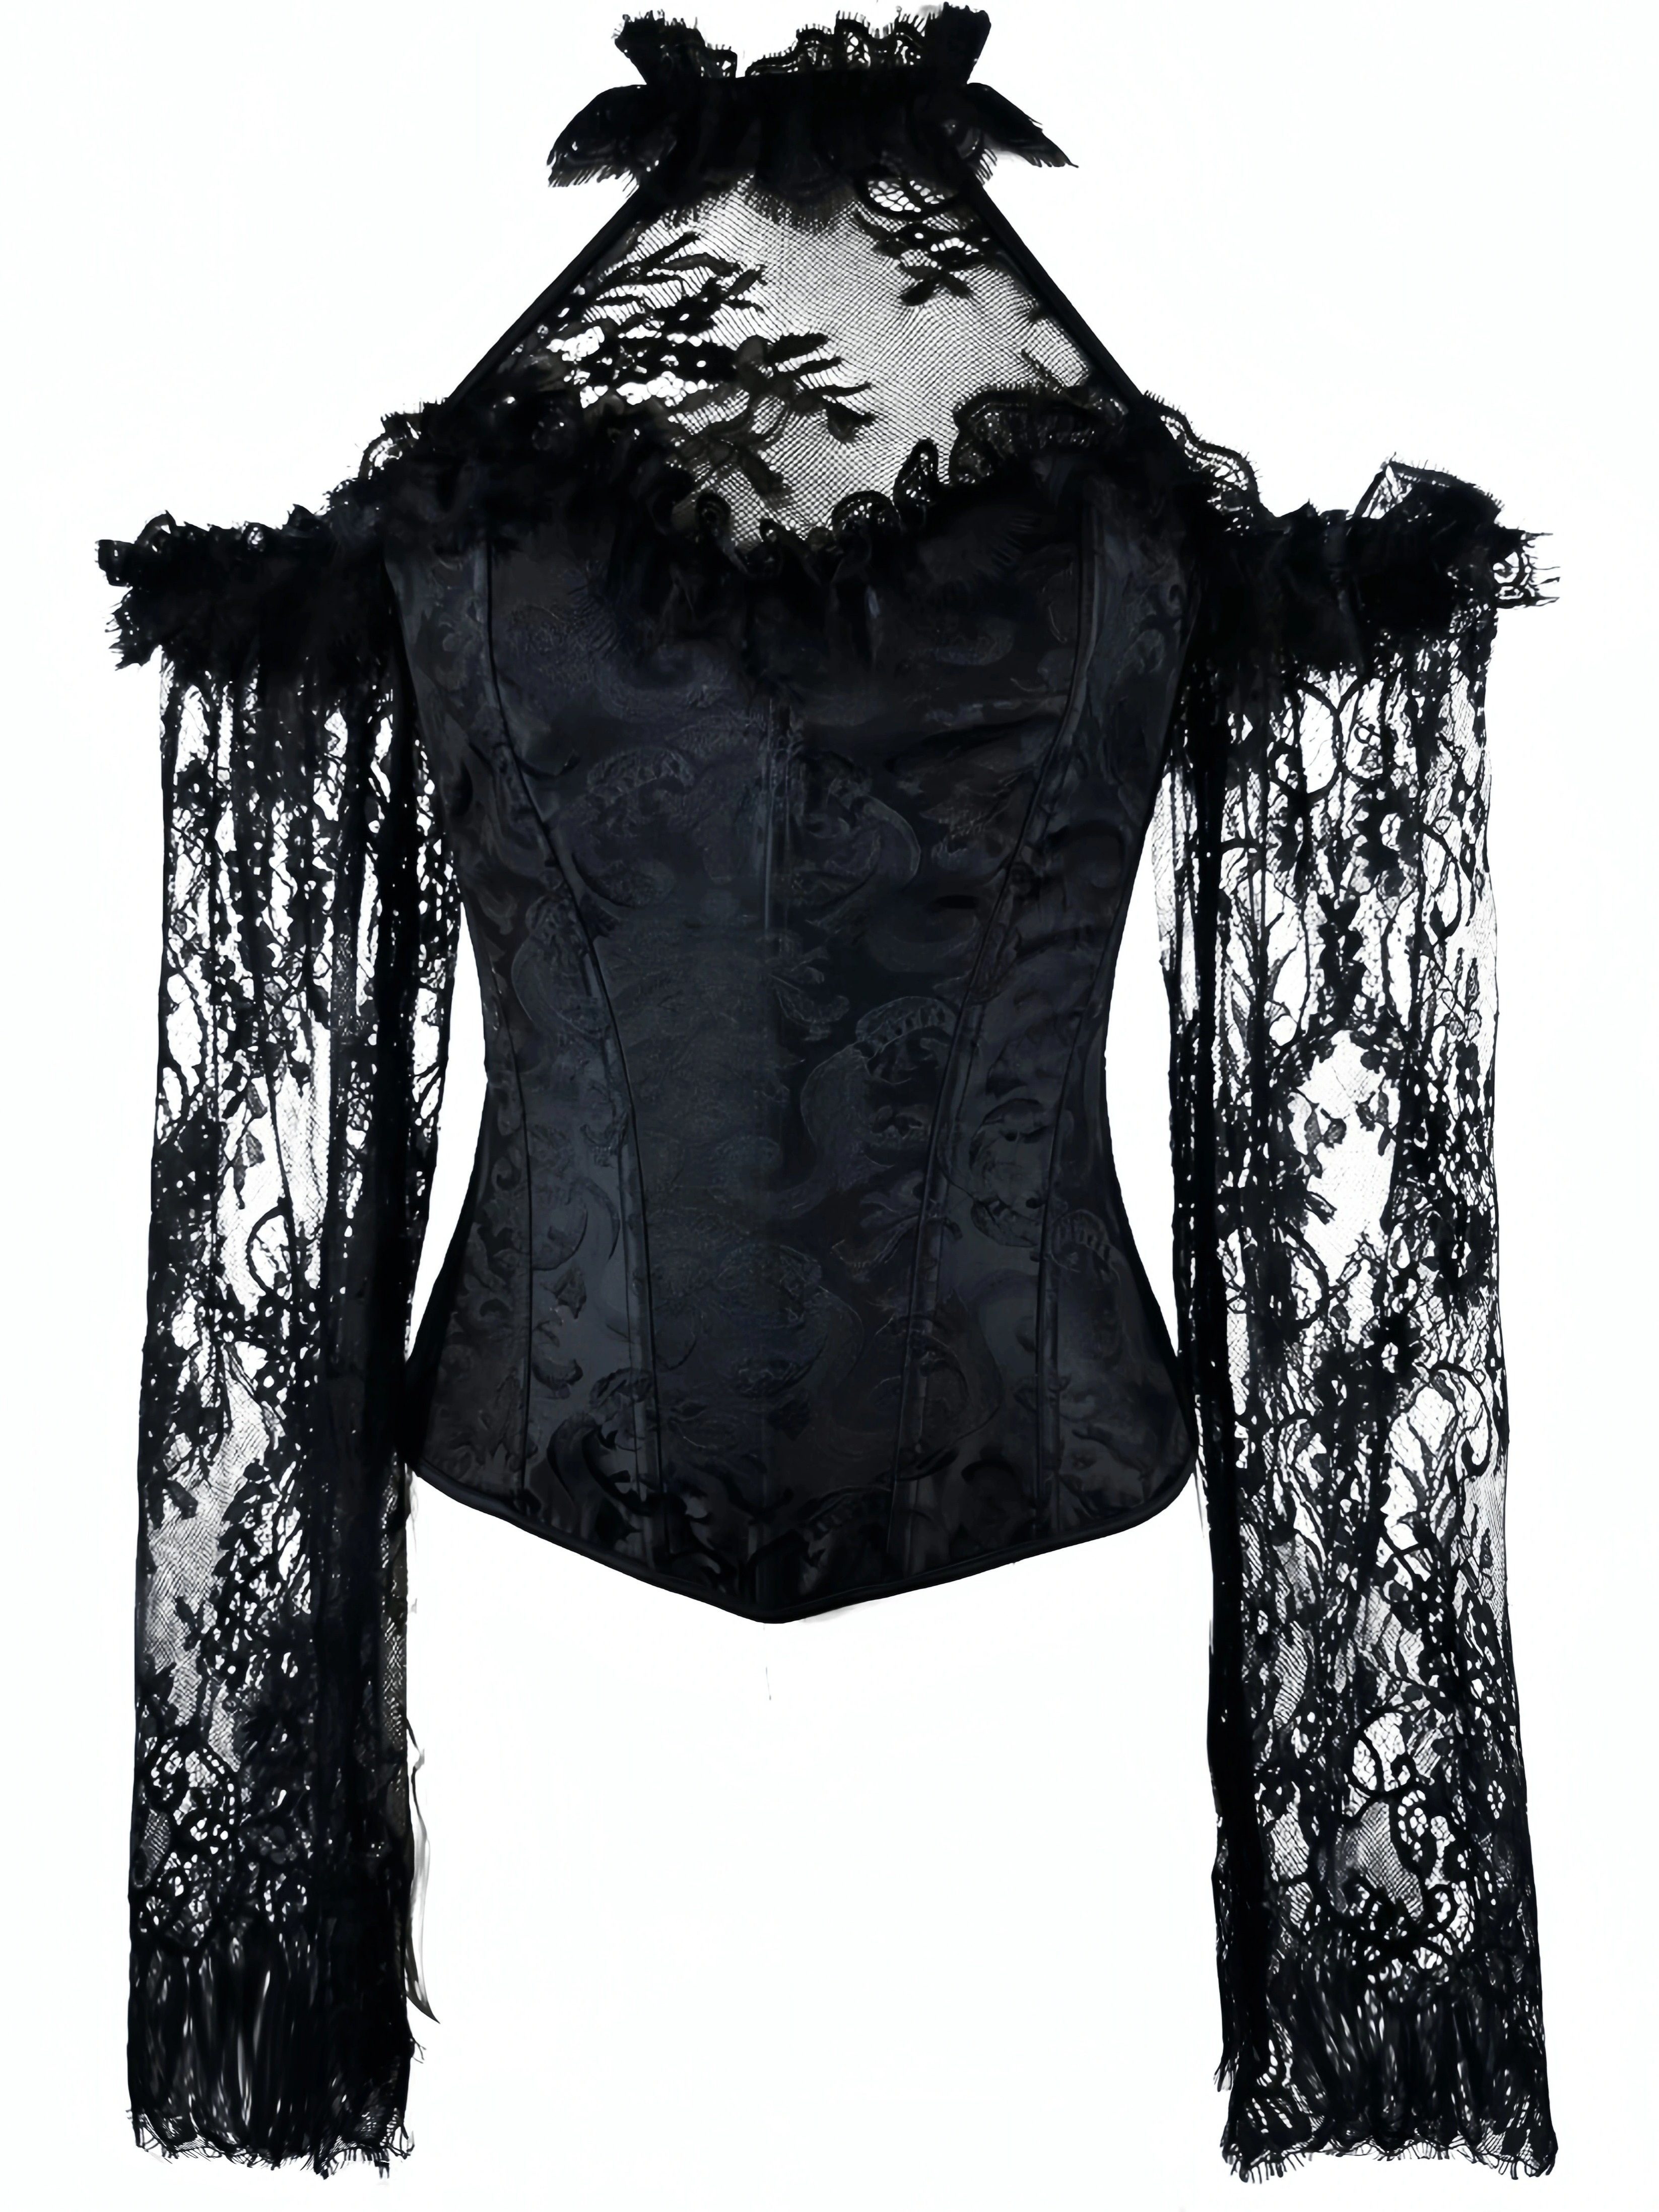 Black lace corset – New Age